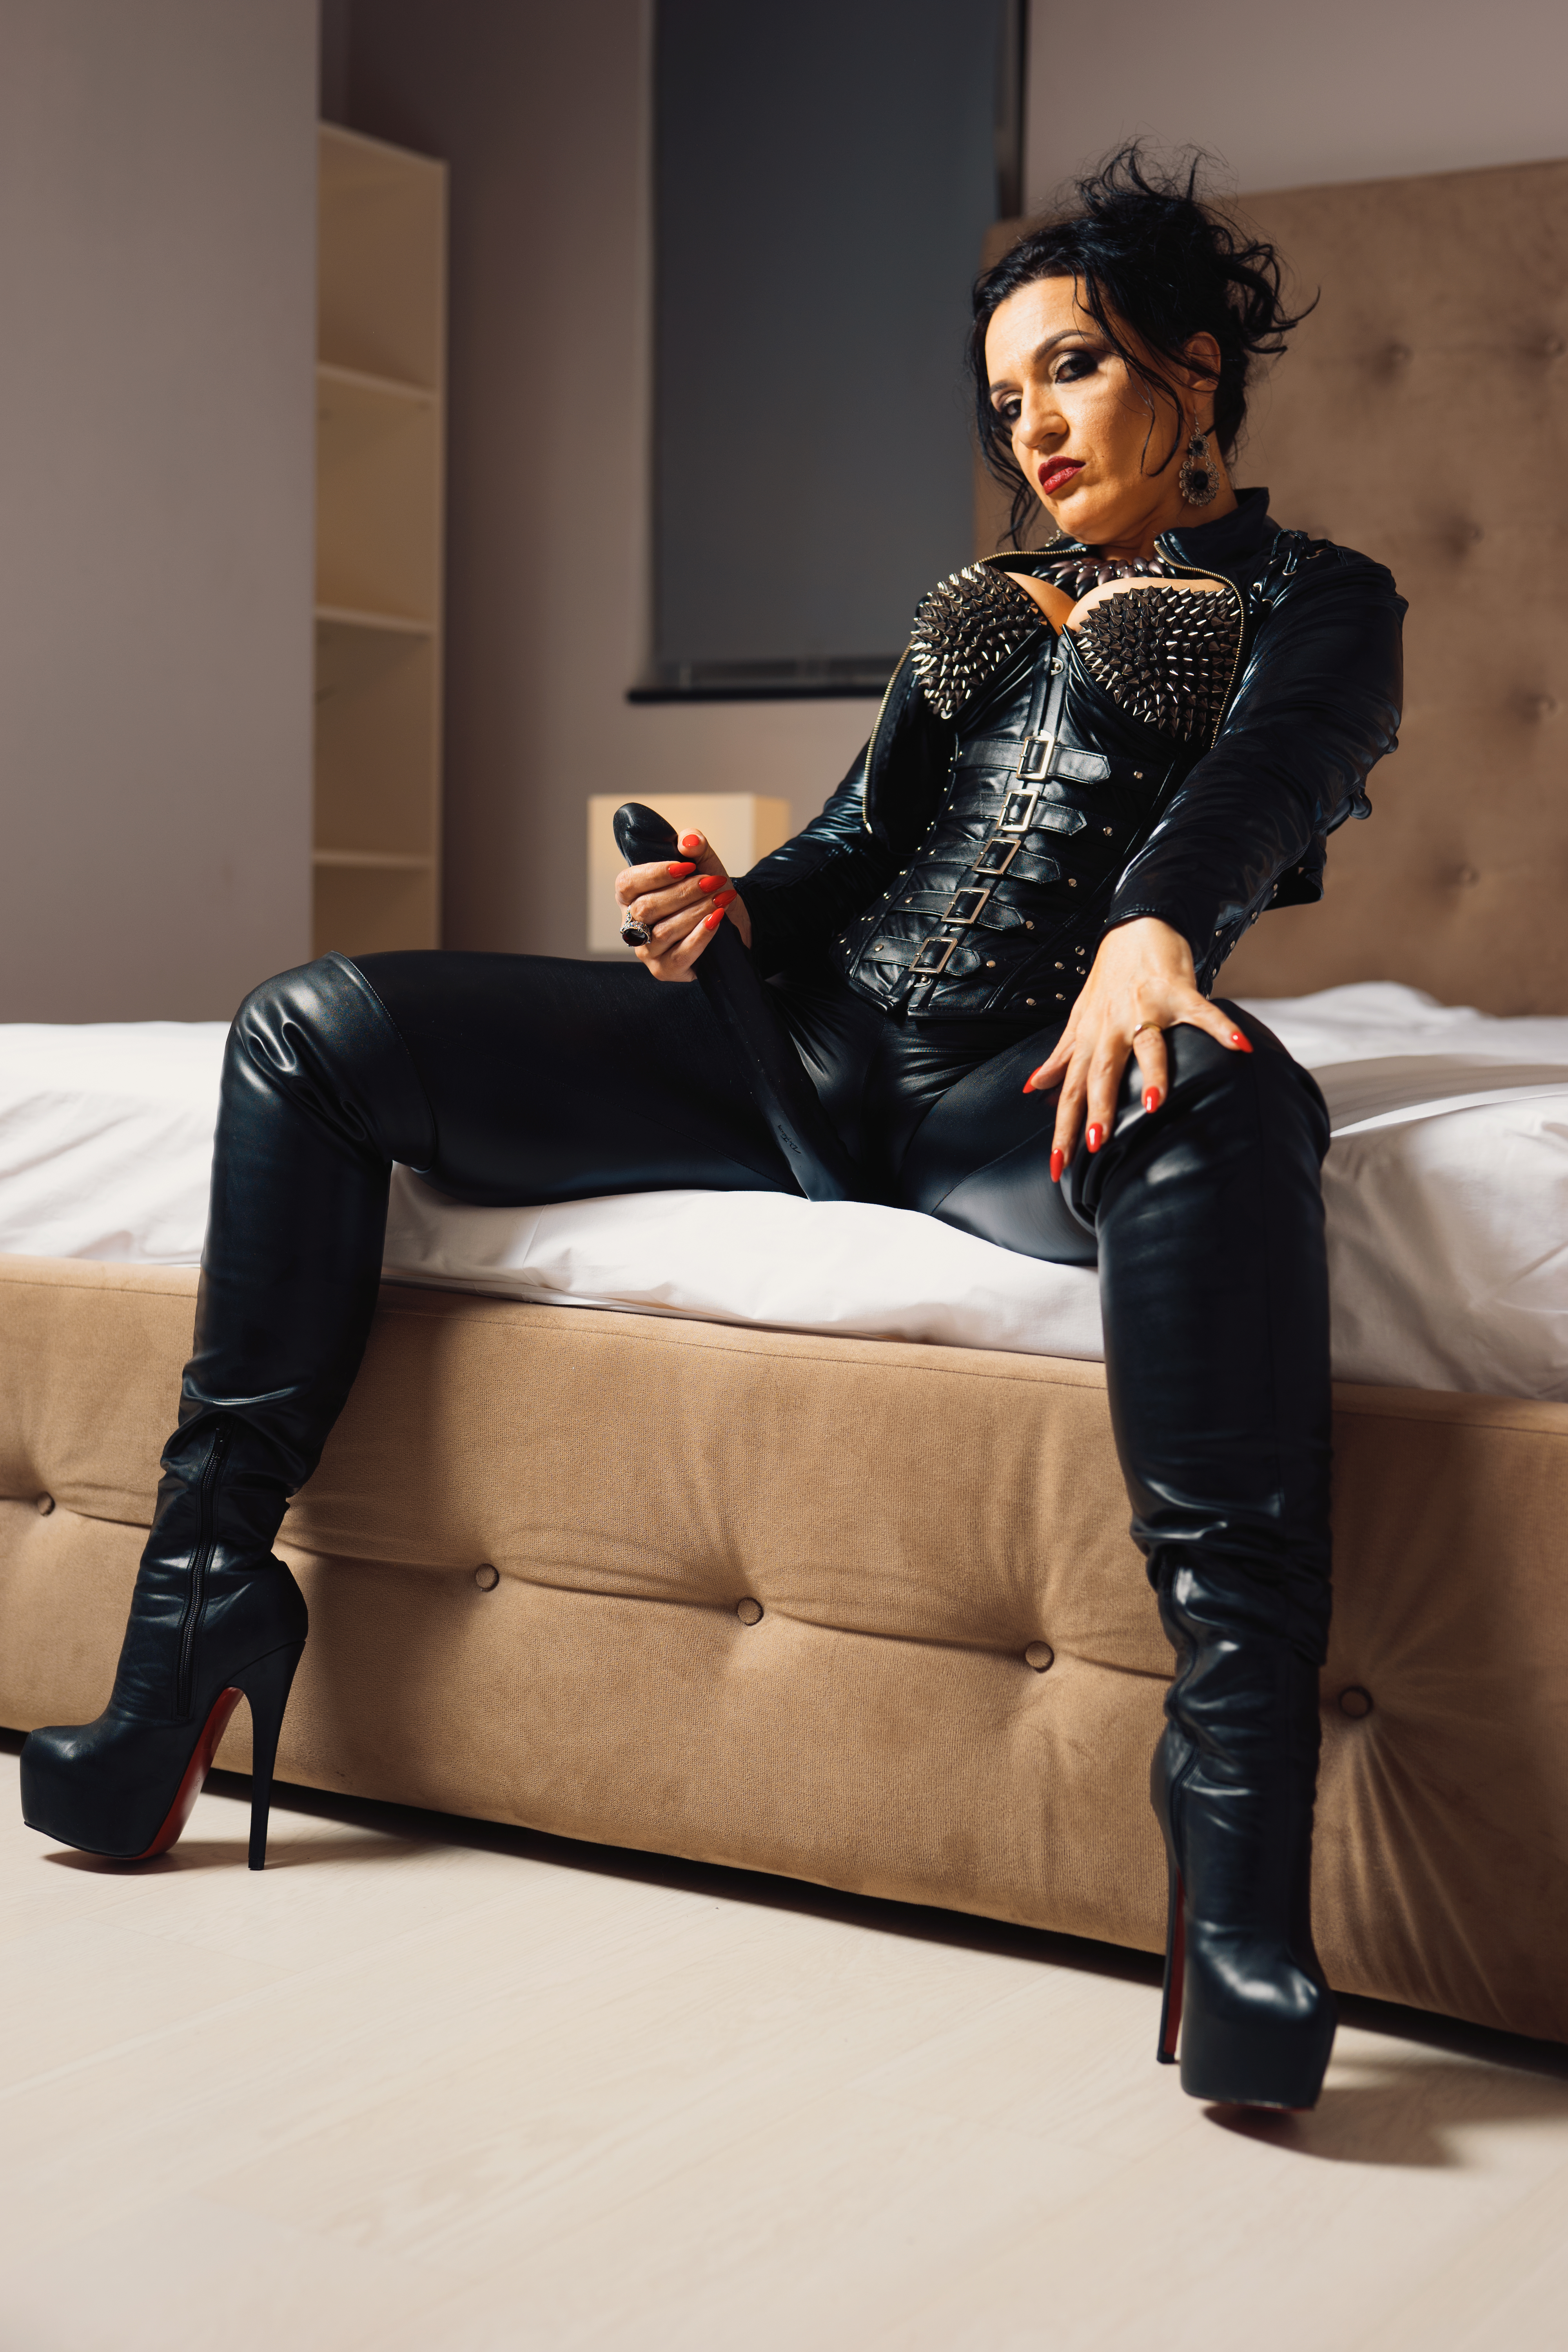 Mistress Luna in leather